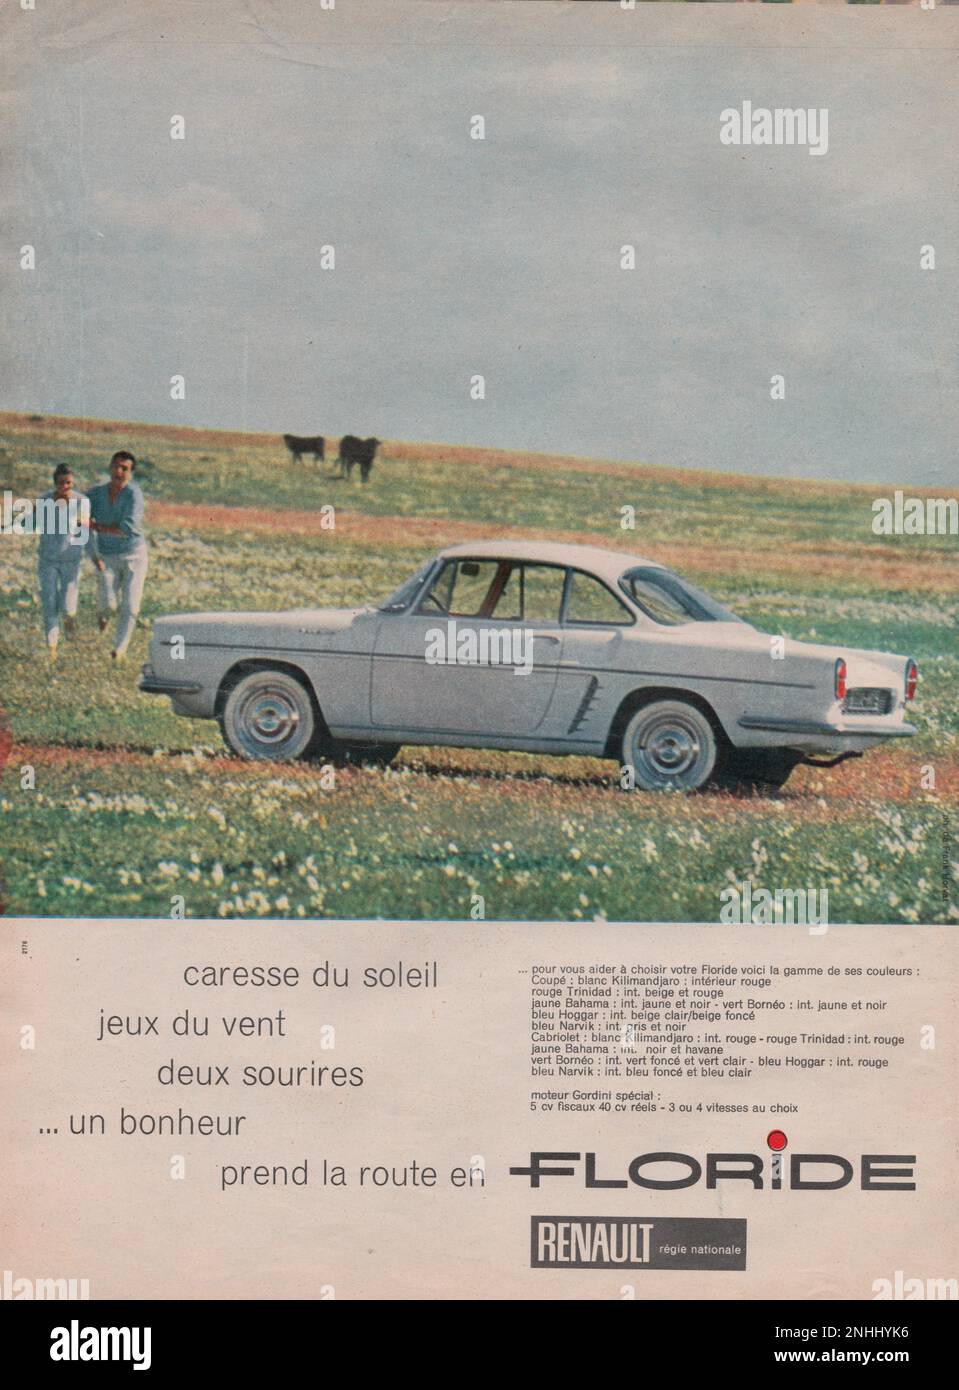 Renault Florida pubblicità rivista d'epoca francese Renault Florida annuncio 1960s Foto Stock